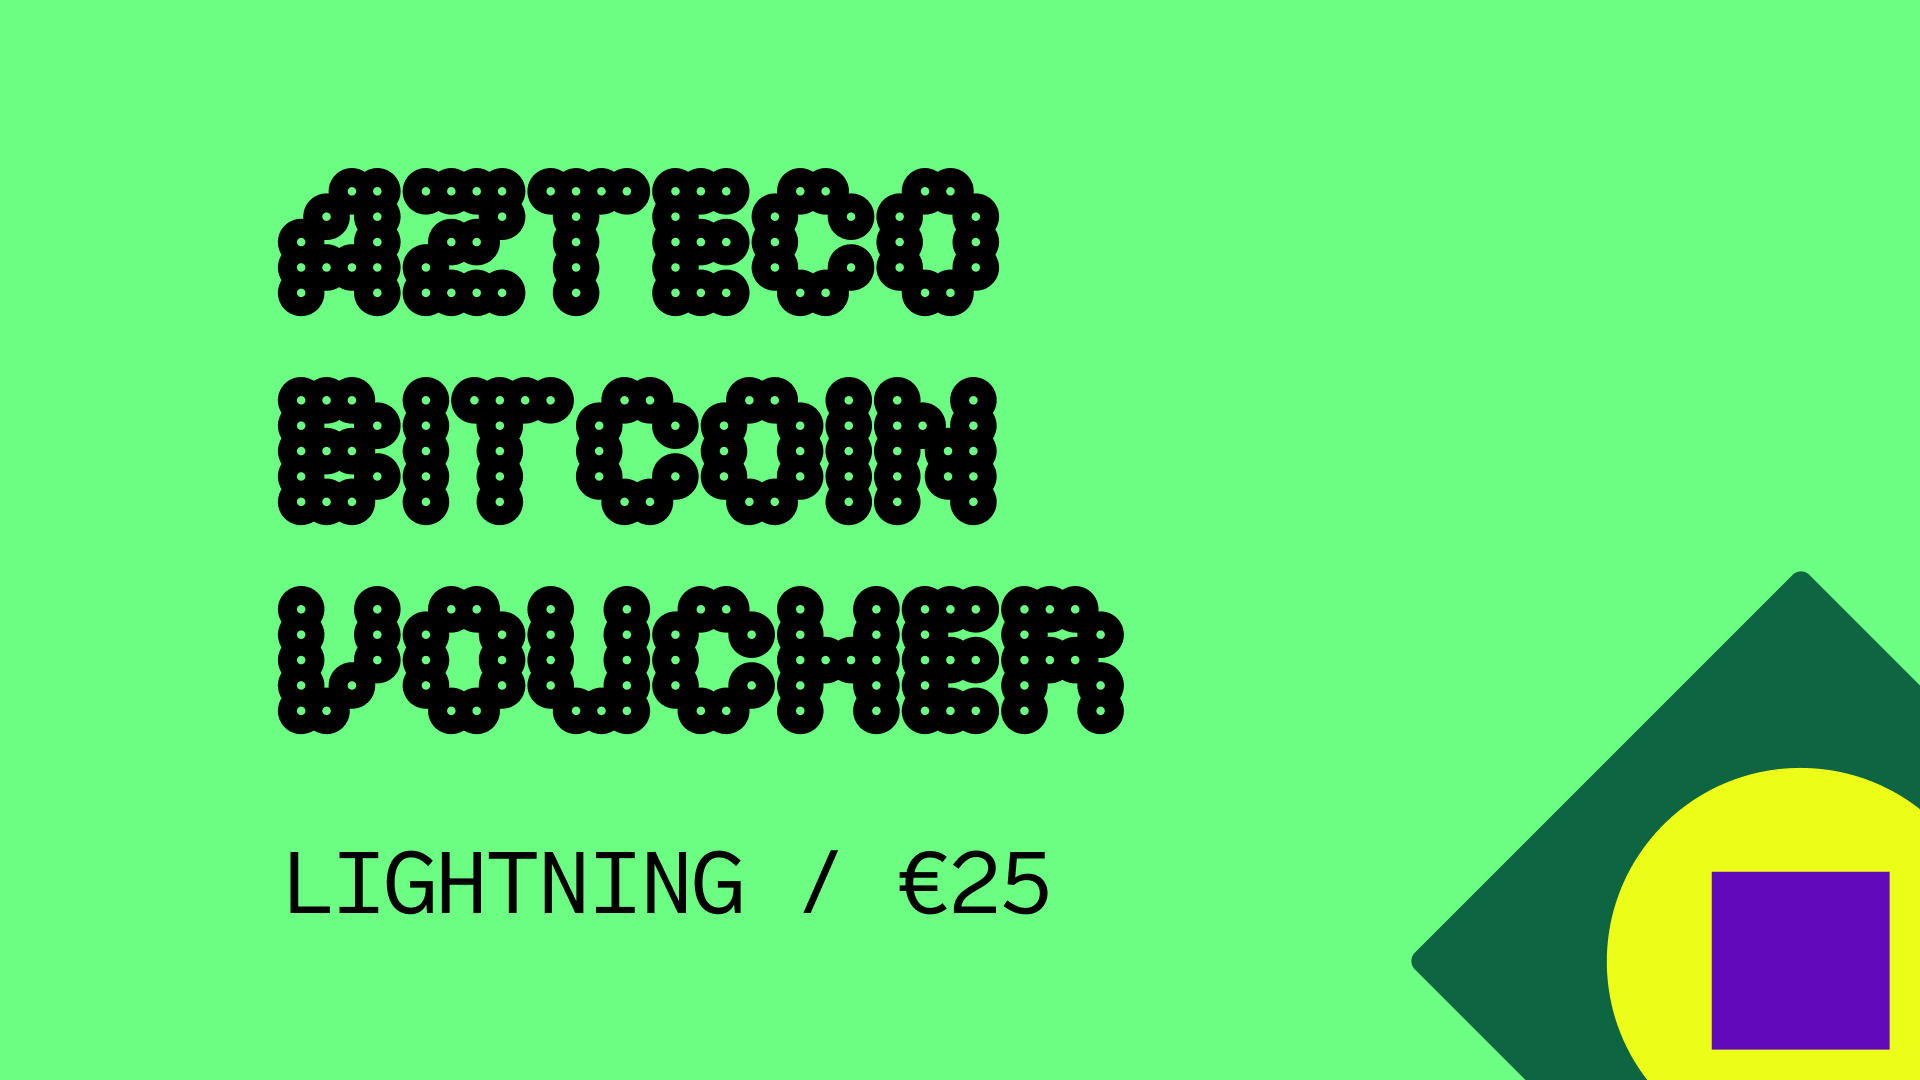 Azteco Bitcoin Lighting €25 Voucher 28.25 $